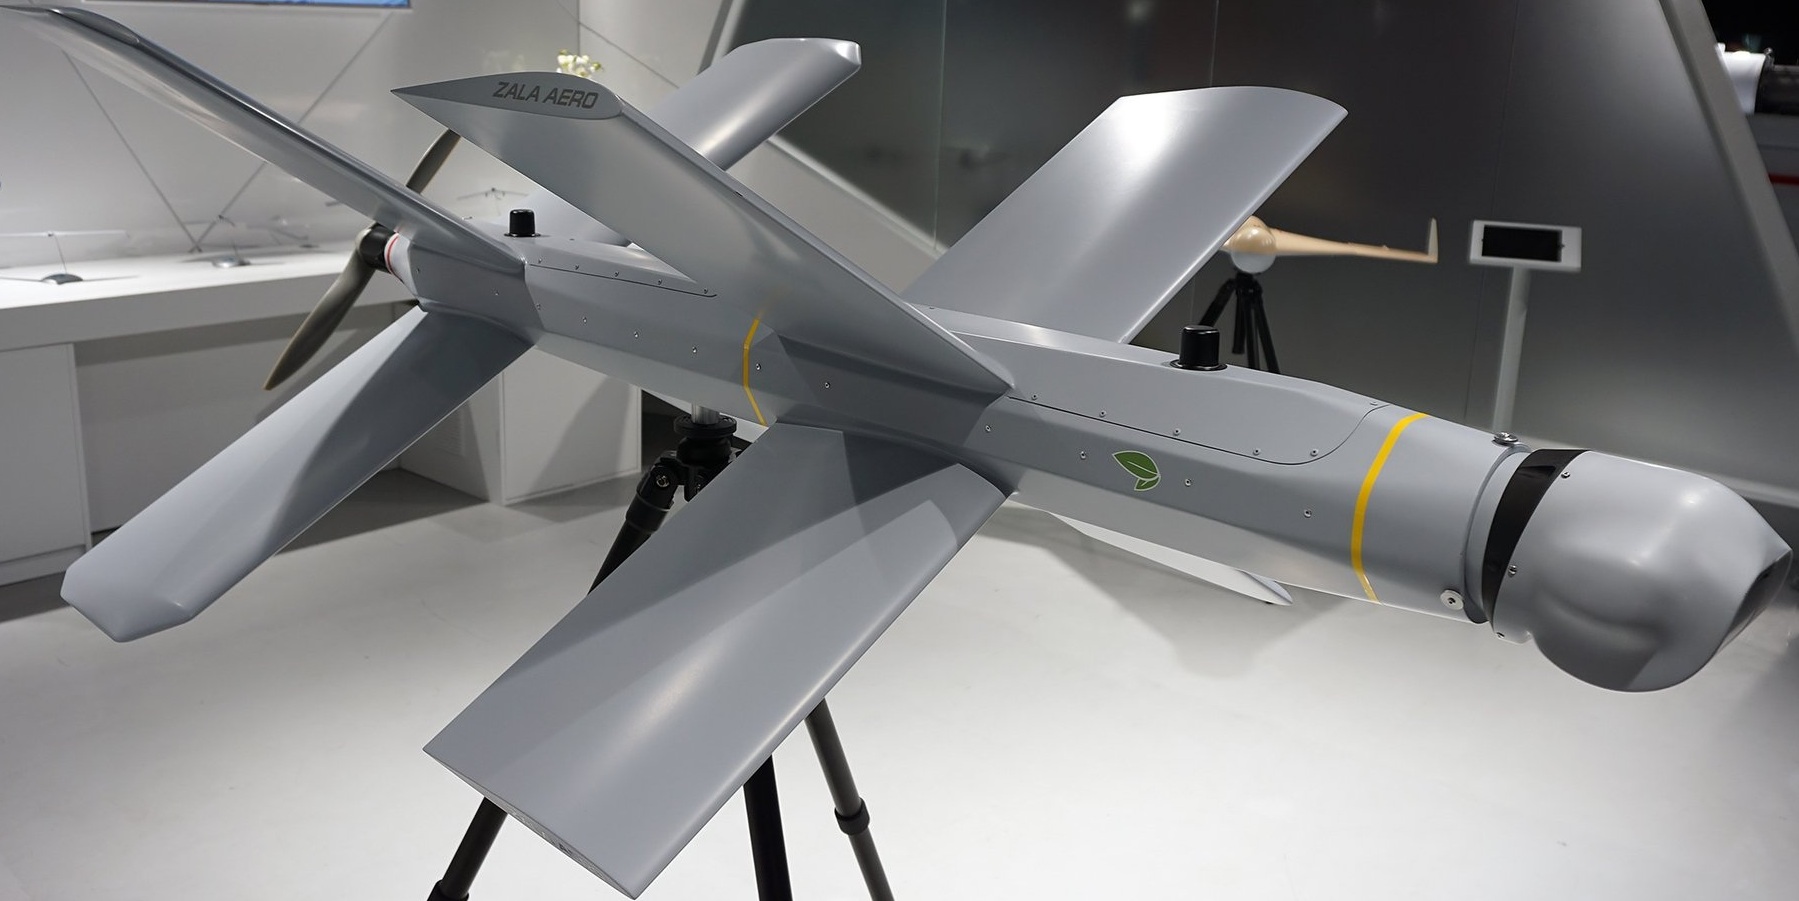 Russians now use Lancet kamikaze drones in Ukraine - Militarnyi